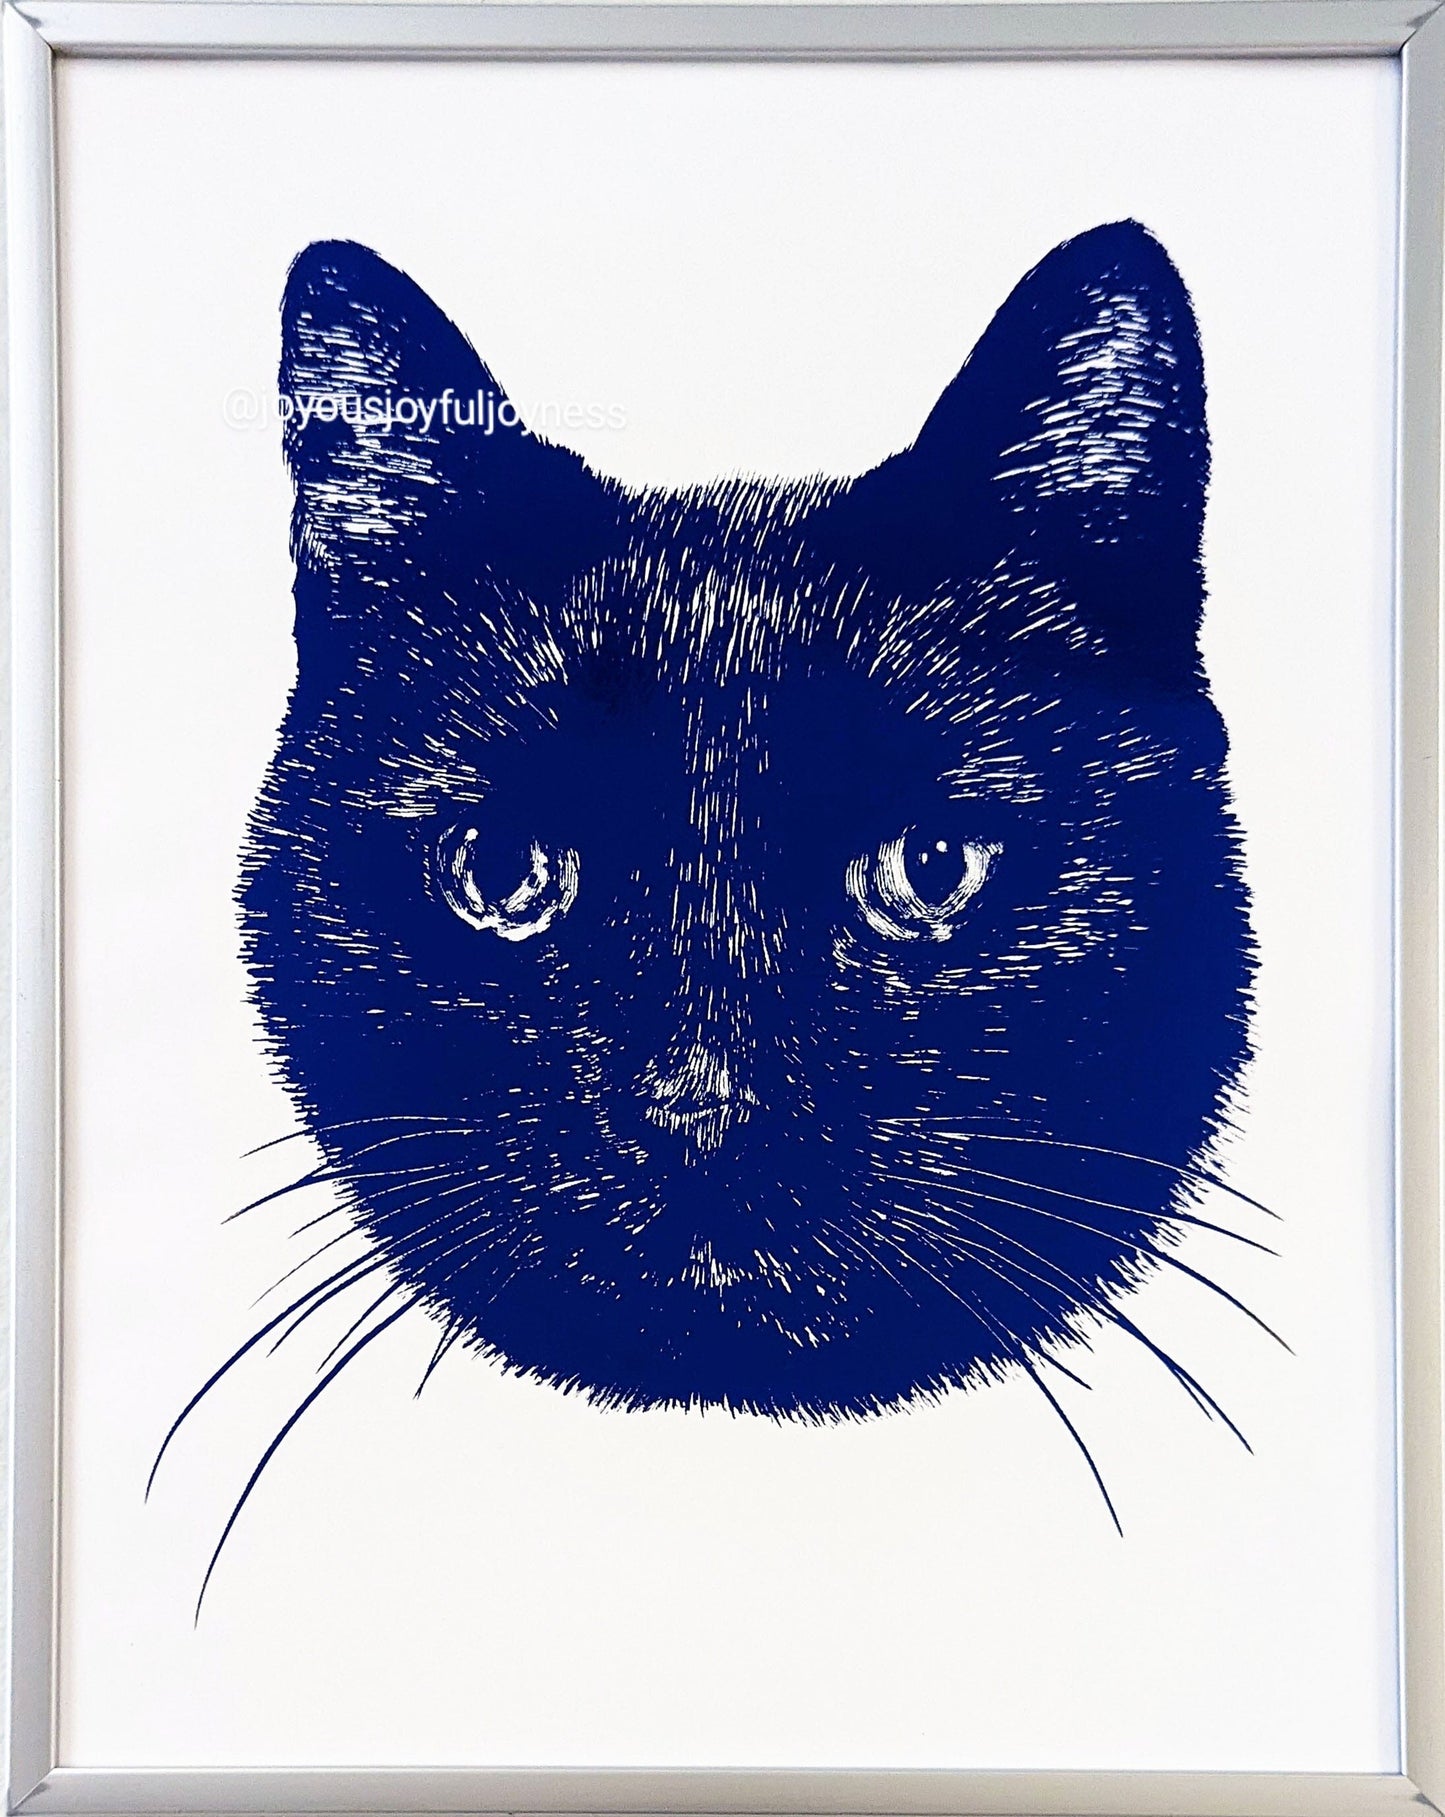 Custom Cat Portraits Posters, Prints, & Visual Artwork JoyousJoyfulJoyness 